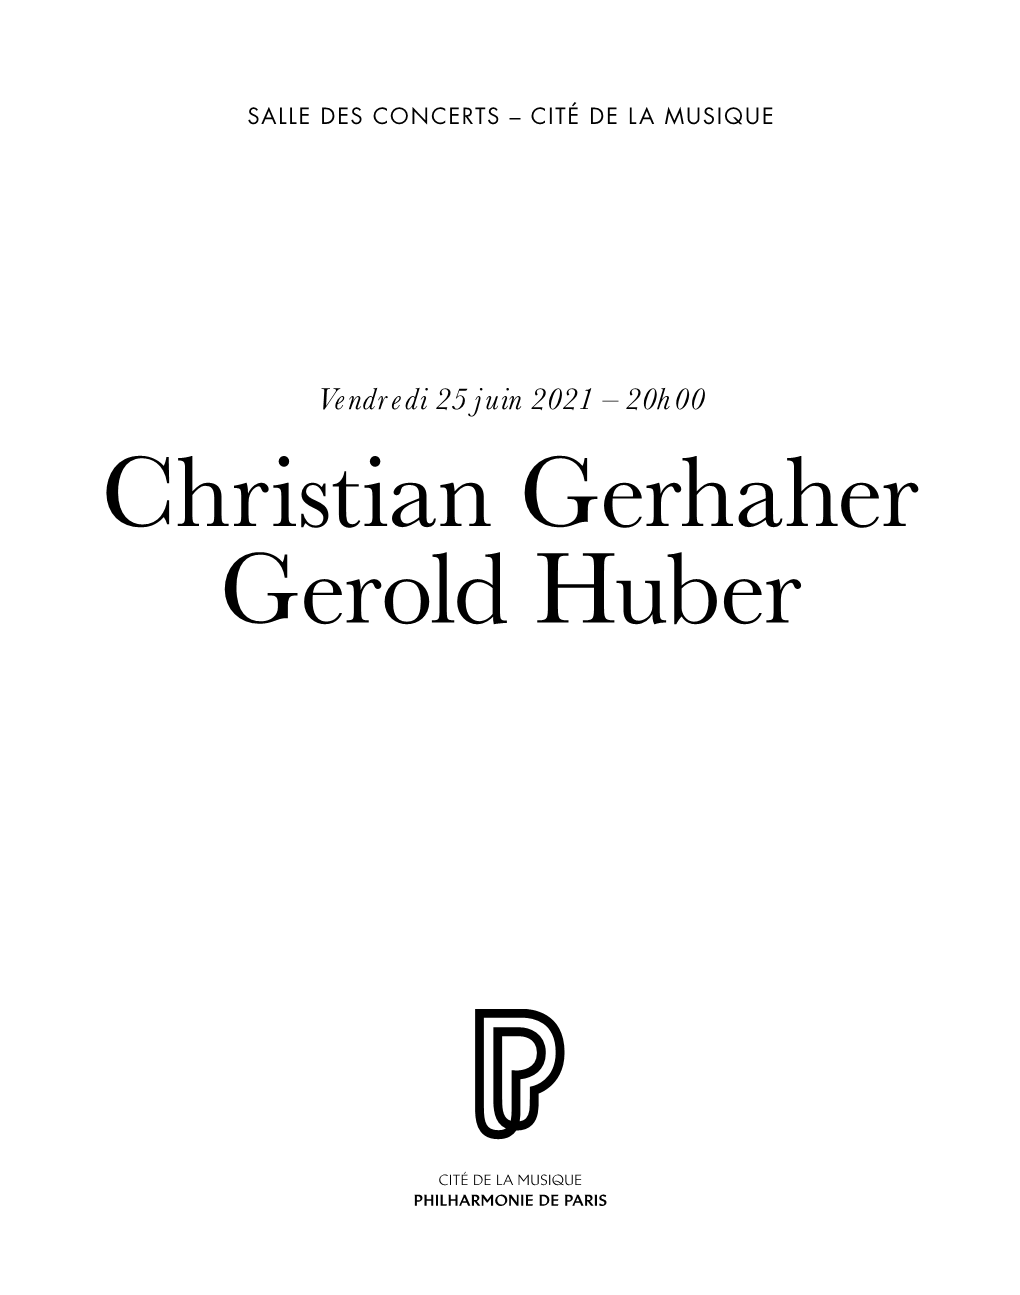 Christian Gerhaher Gerold Huber